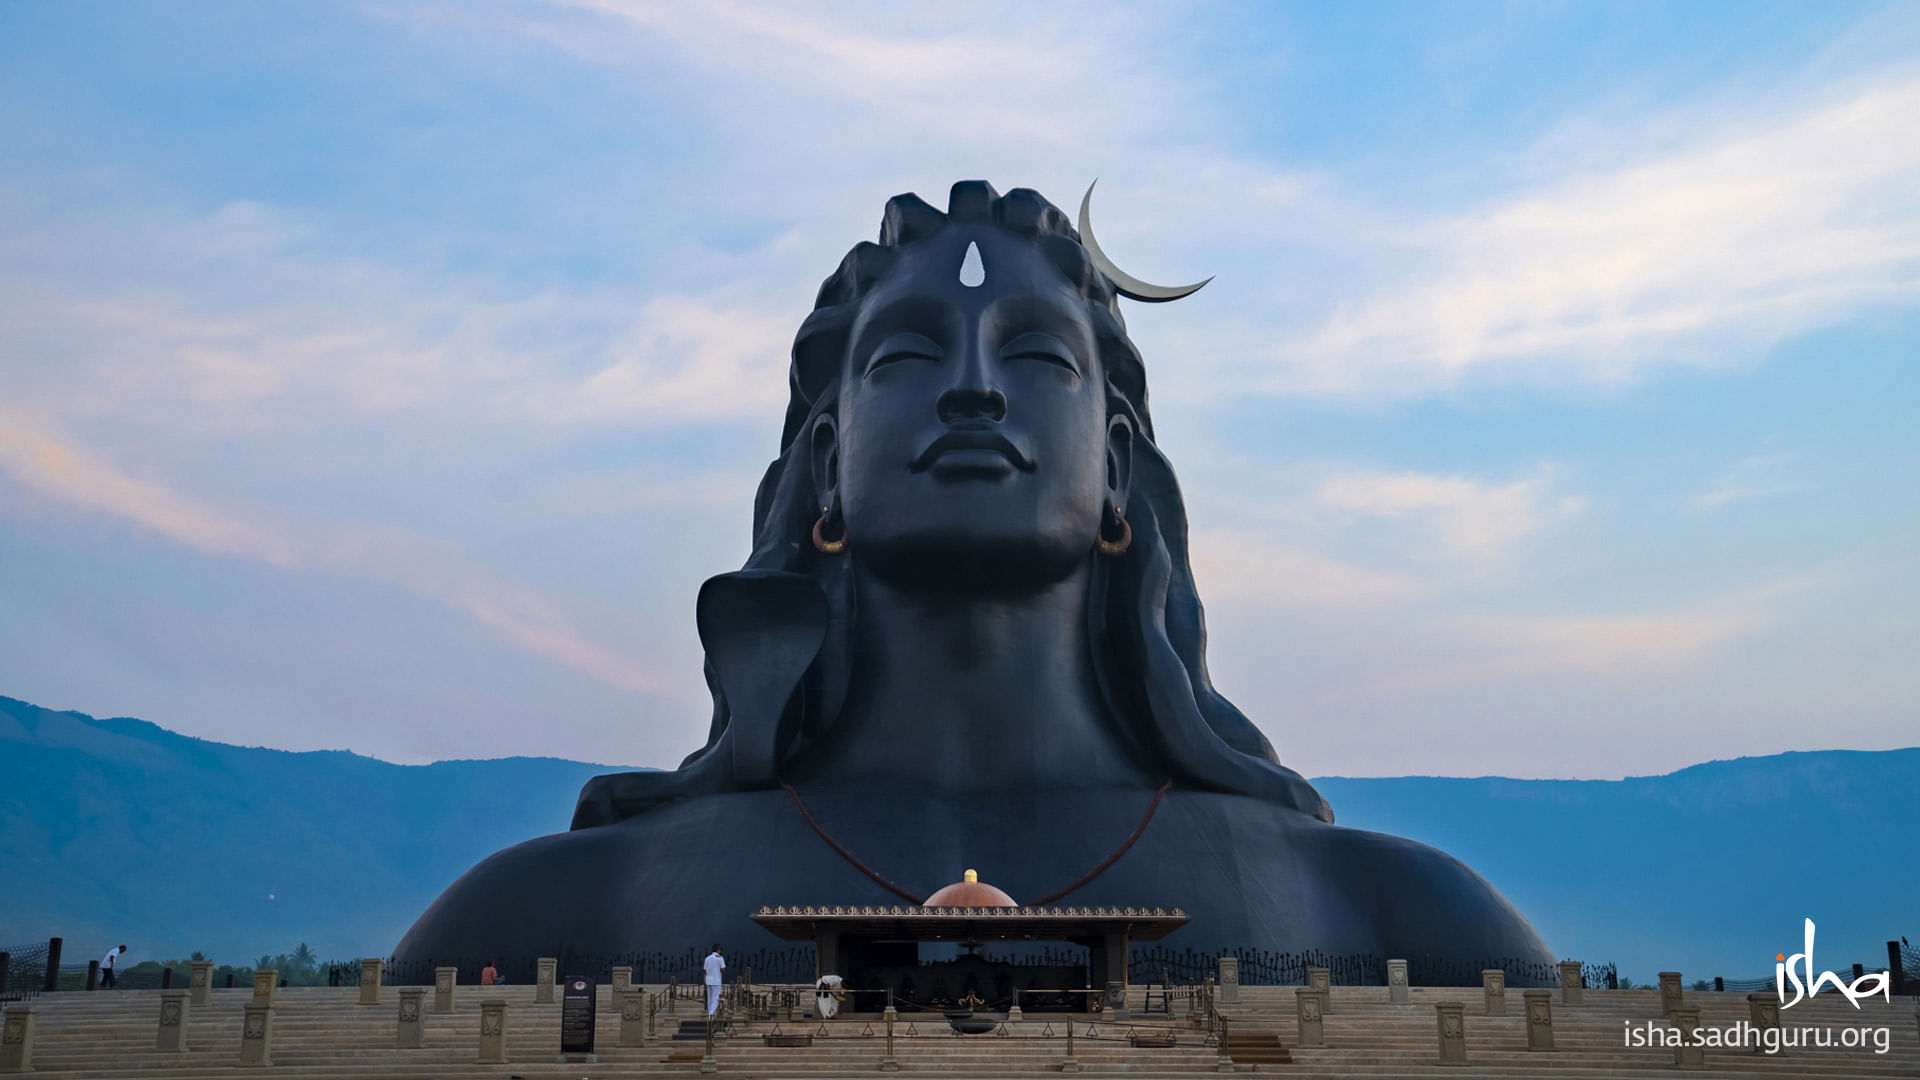 60+ Shiva(Adiyogi) Wallpapers HD - Free Download for Mobile and Desktop